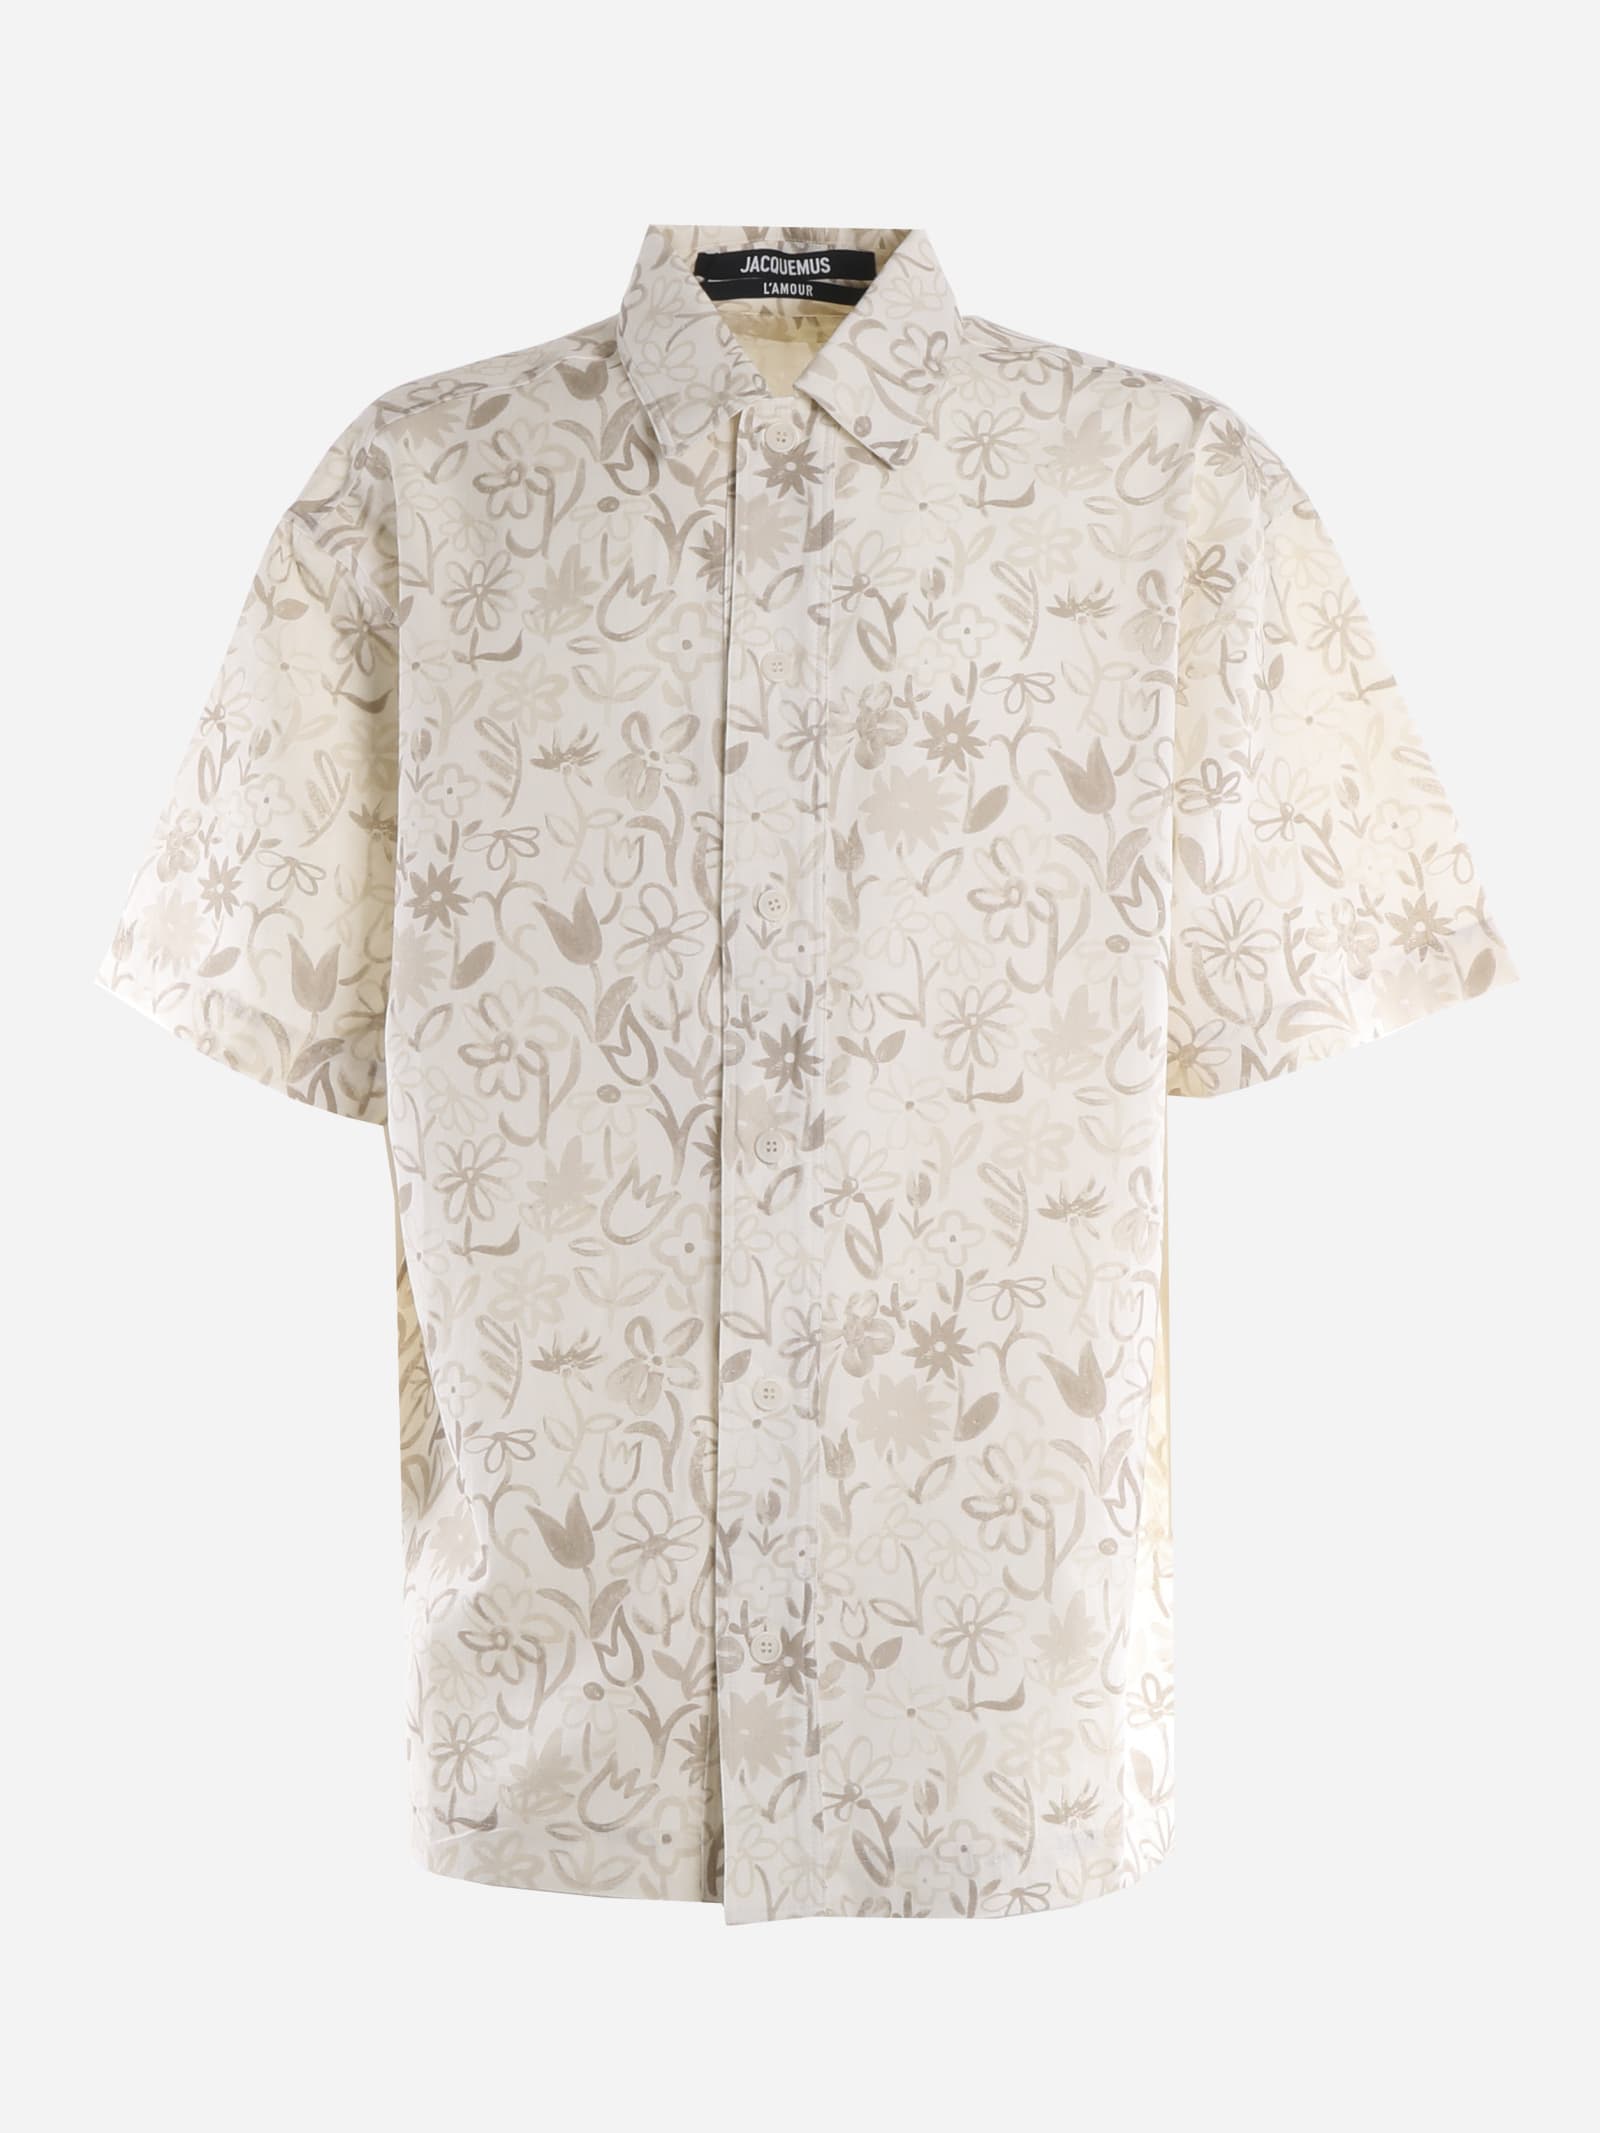 Jacquemus Floral Print Shirt